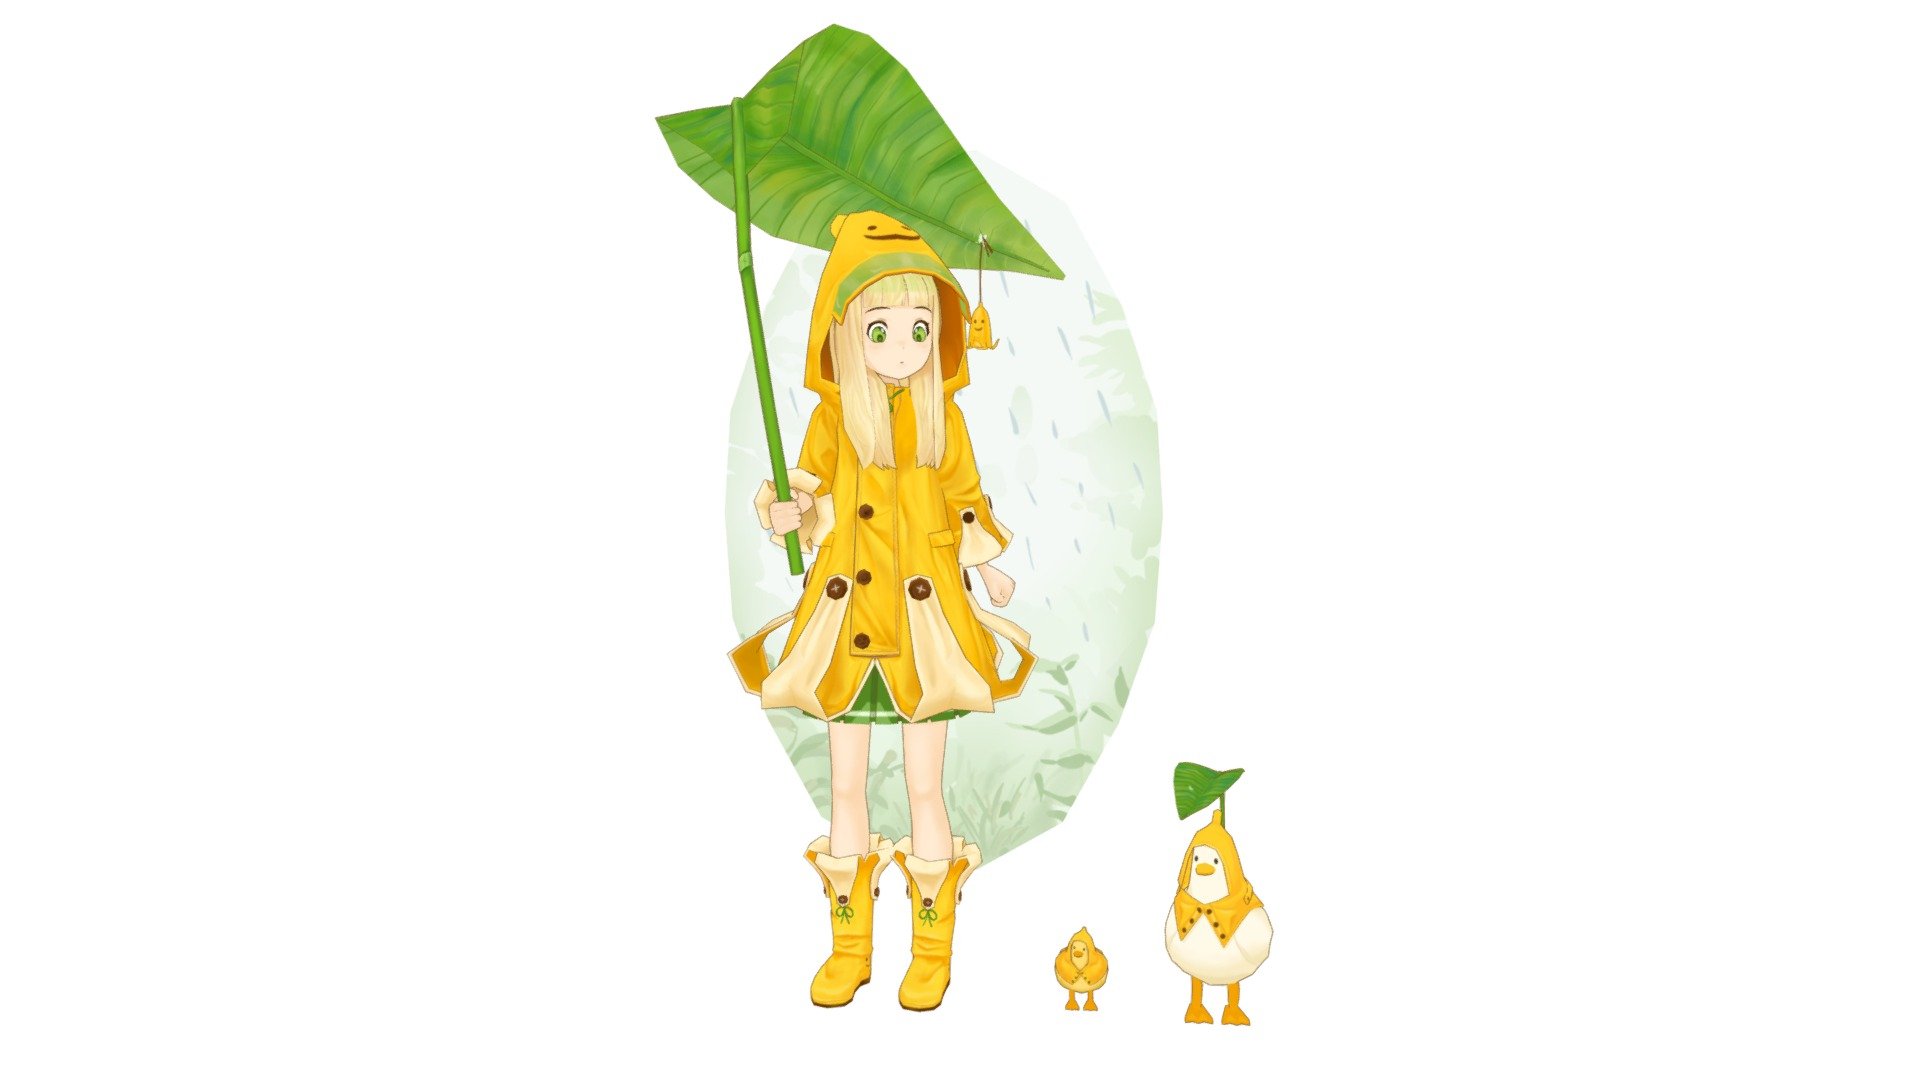 concept by amazing artist : 리노참치Rinotuna
twitter :https://twitter.com/rinotuna
https://twitter.com/rinotuna/status/1550525216853413889/photo/1
blender&amp;subspainter - banana girl (concept by 리노참치Rinotuna) - 3D model by Vivi Chen (@qaz840530) 3d model